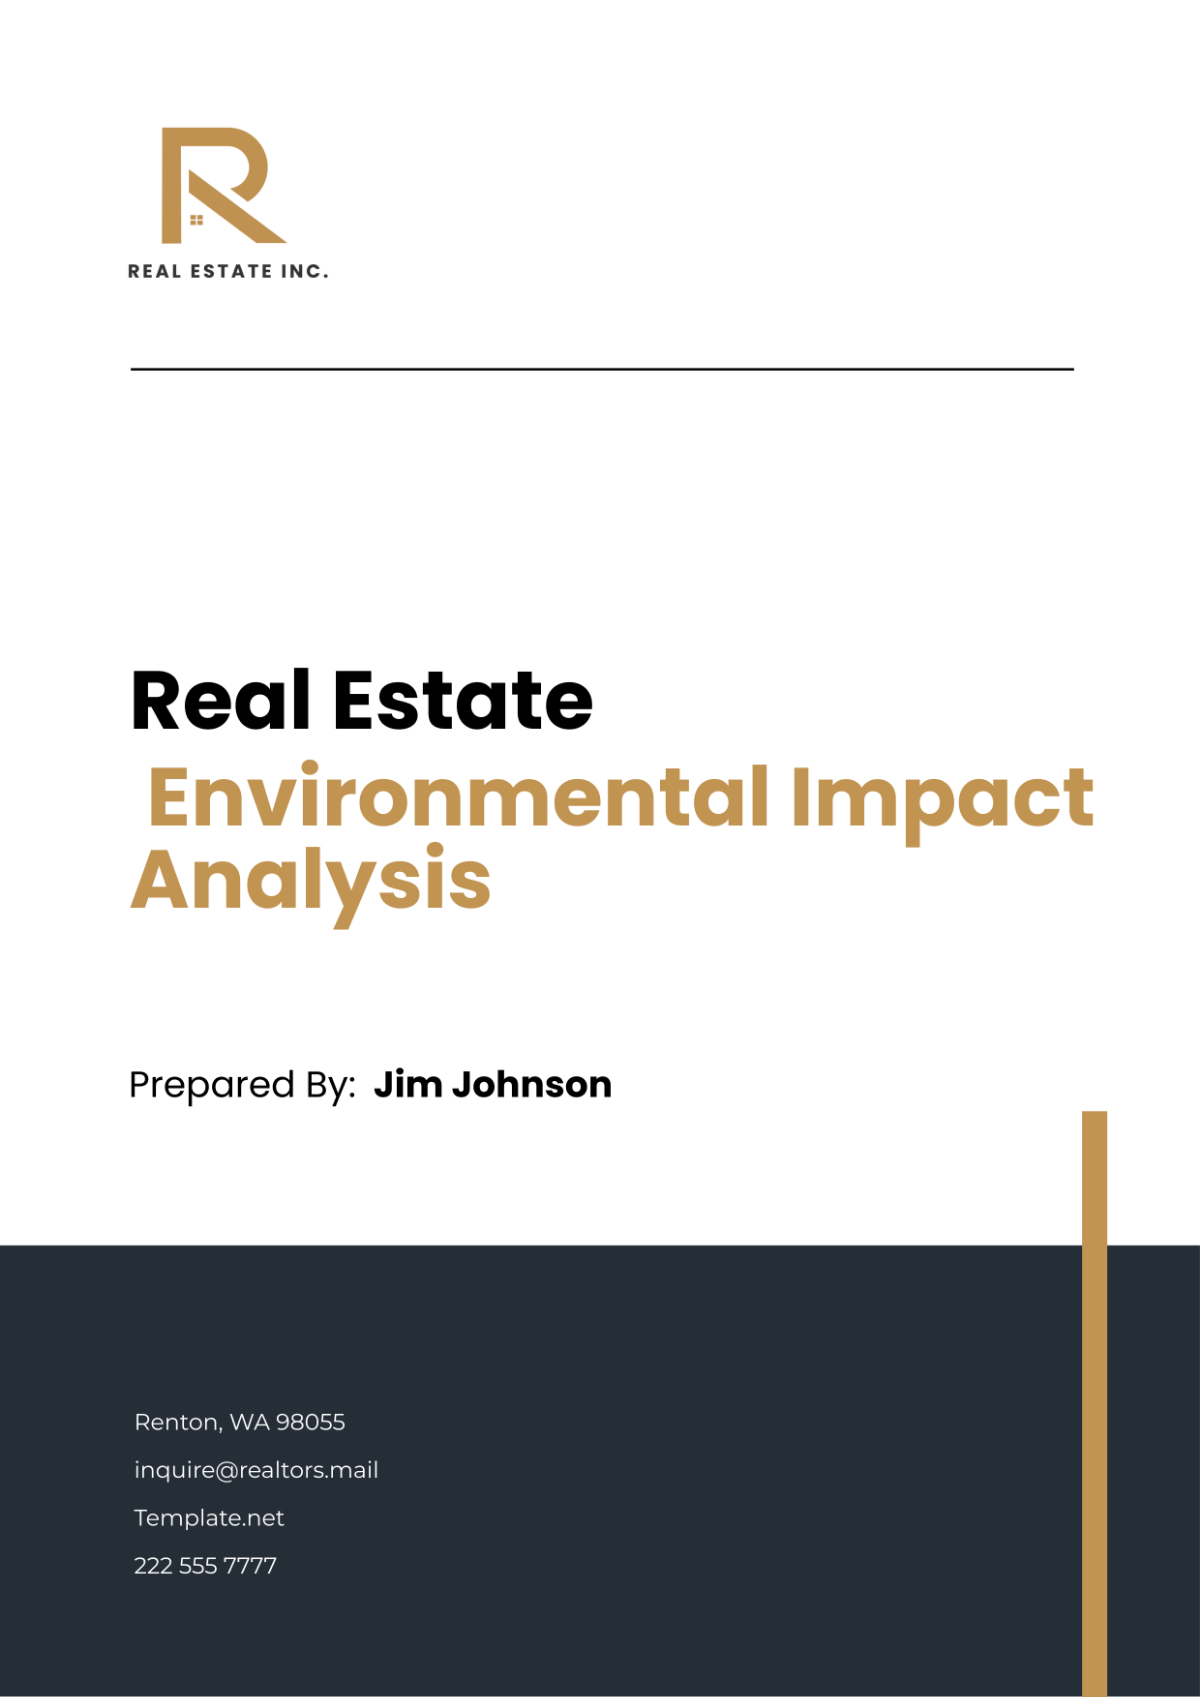 Real Estate Environmental Impact Analysis Template